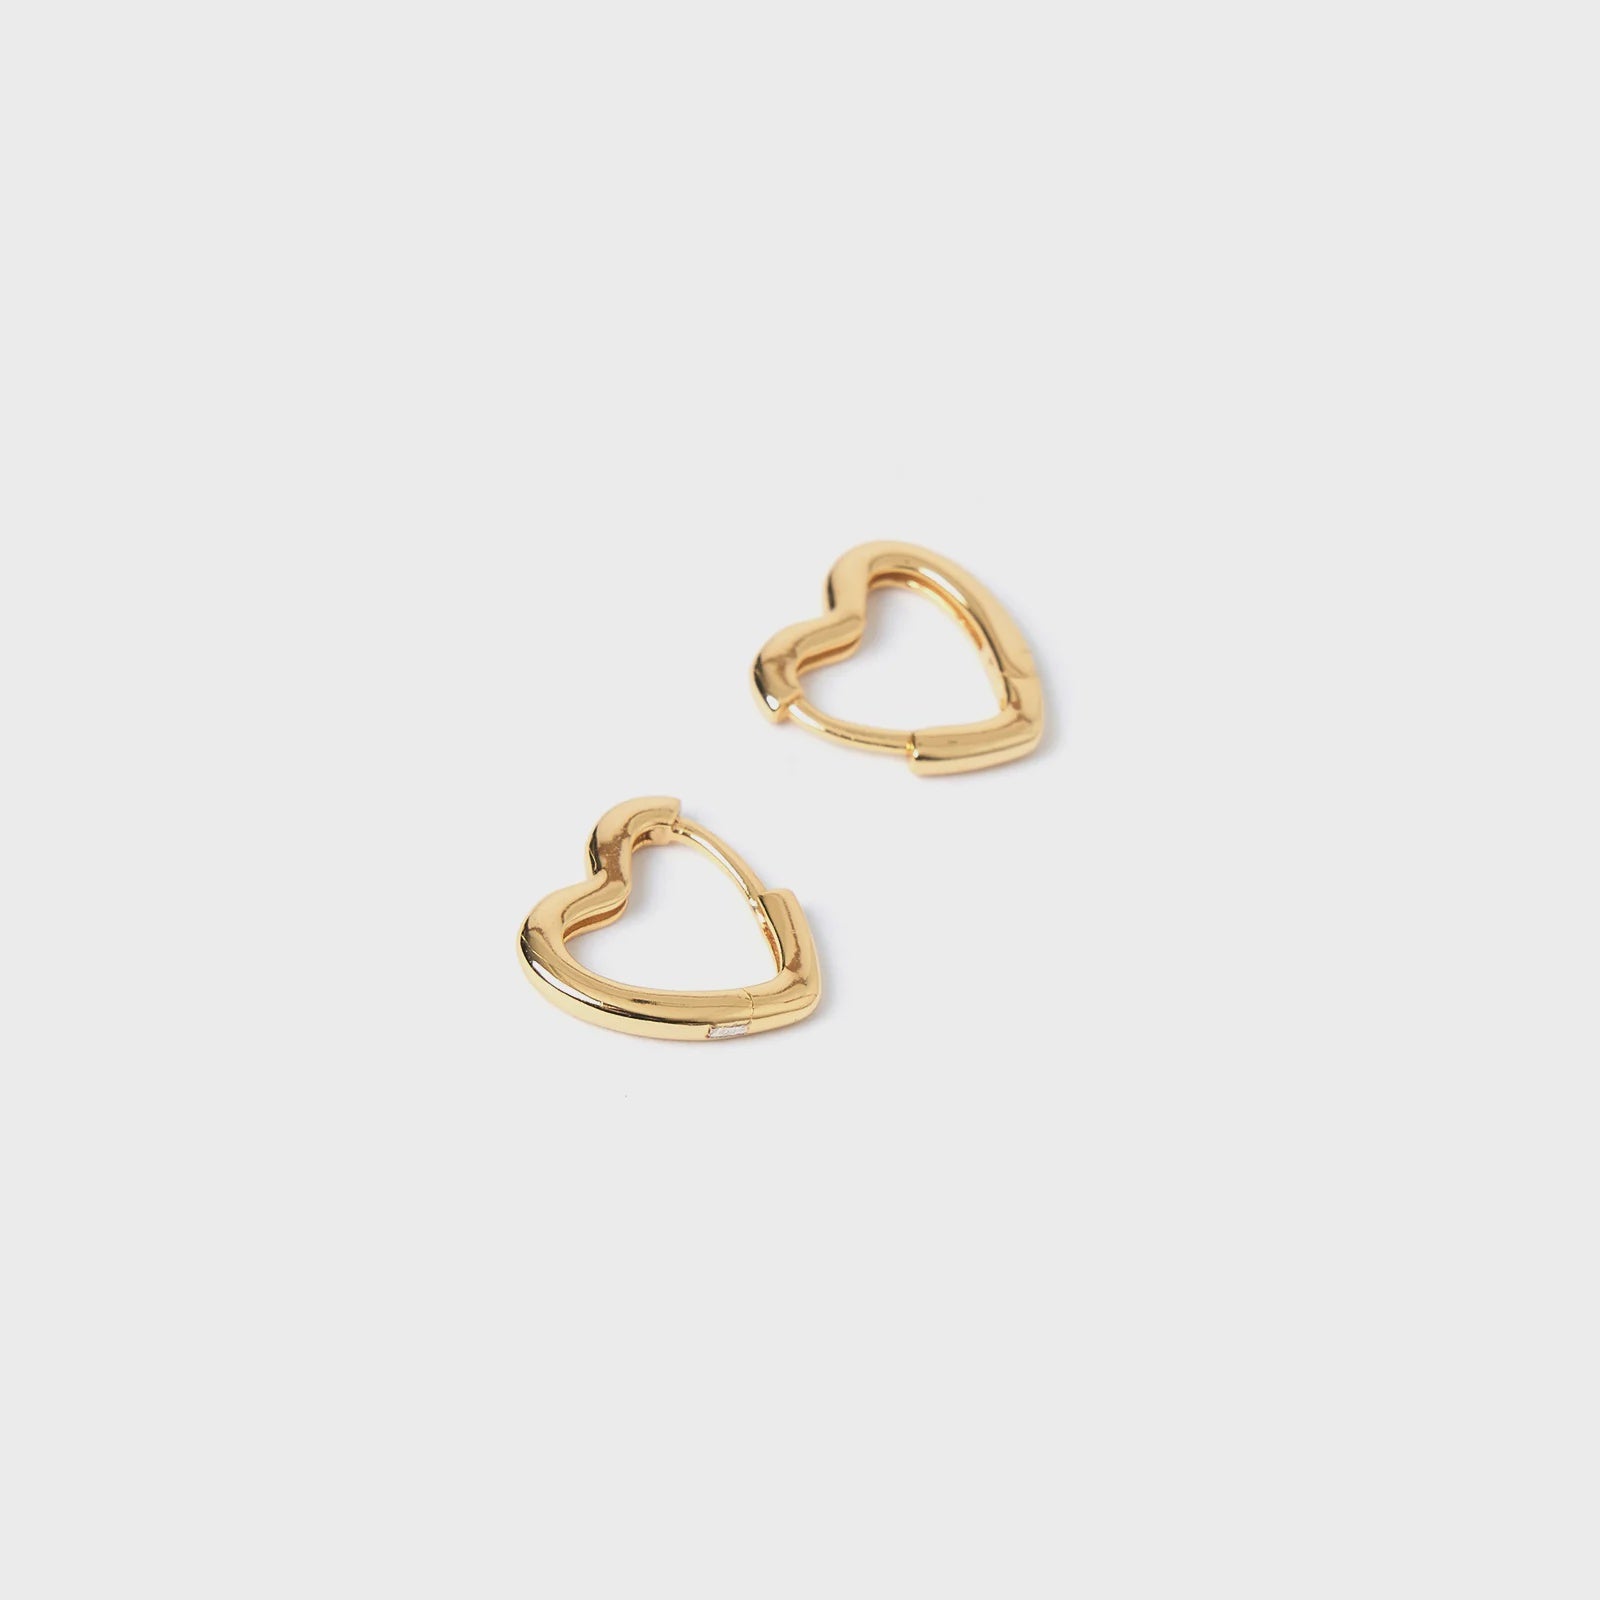 Sweetheart Gold Earrings - Small